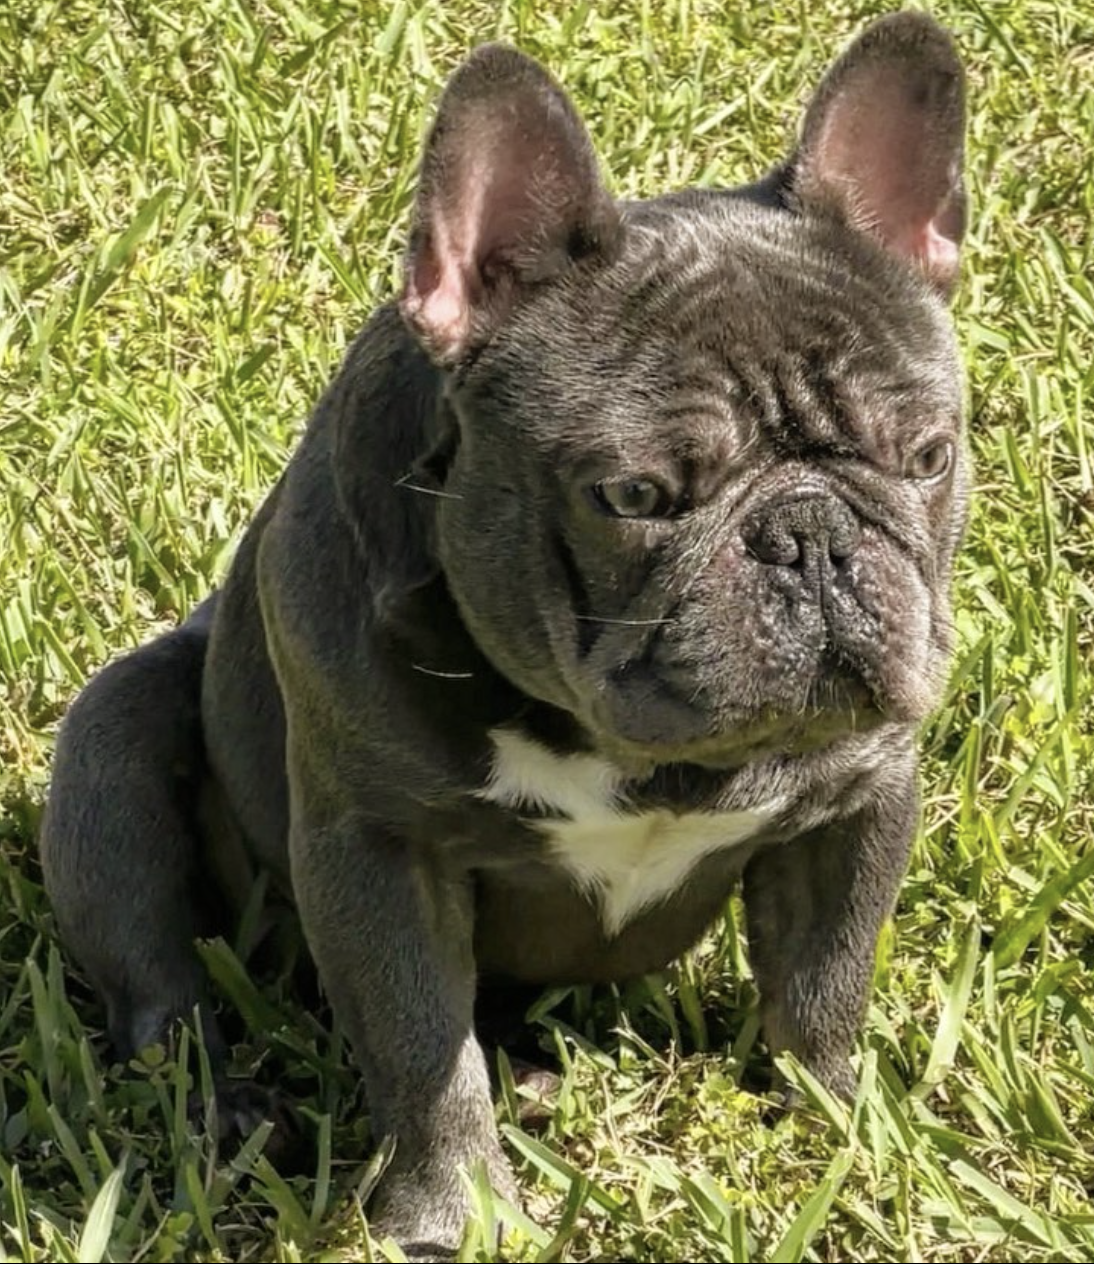 Cersei's World Frenchies, French Bulldog Breeder, French Bulldog, Frenchies, Frenchie puppies, French Bulldog puppies in Florida, Miami